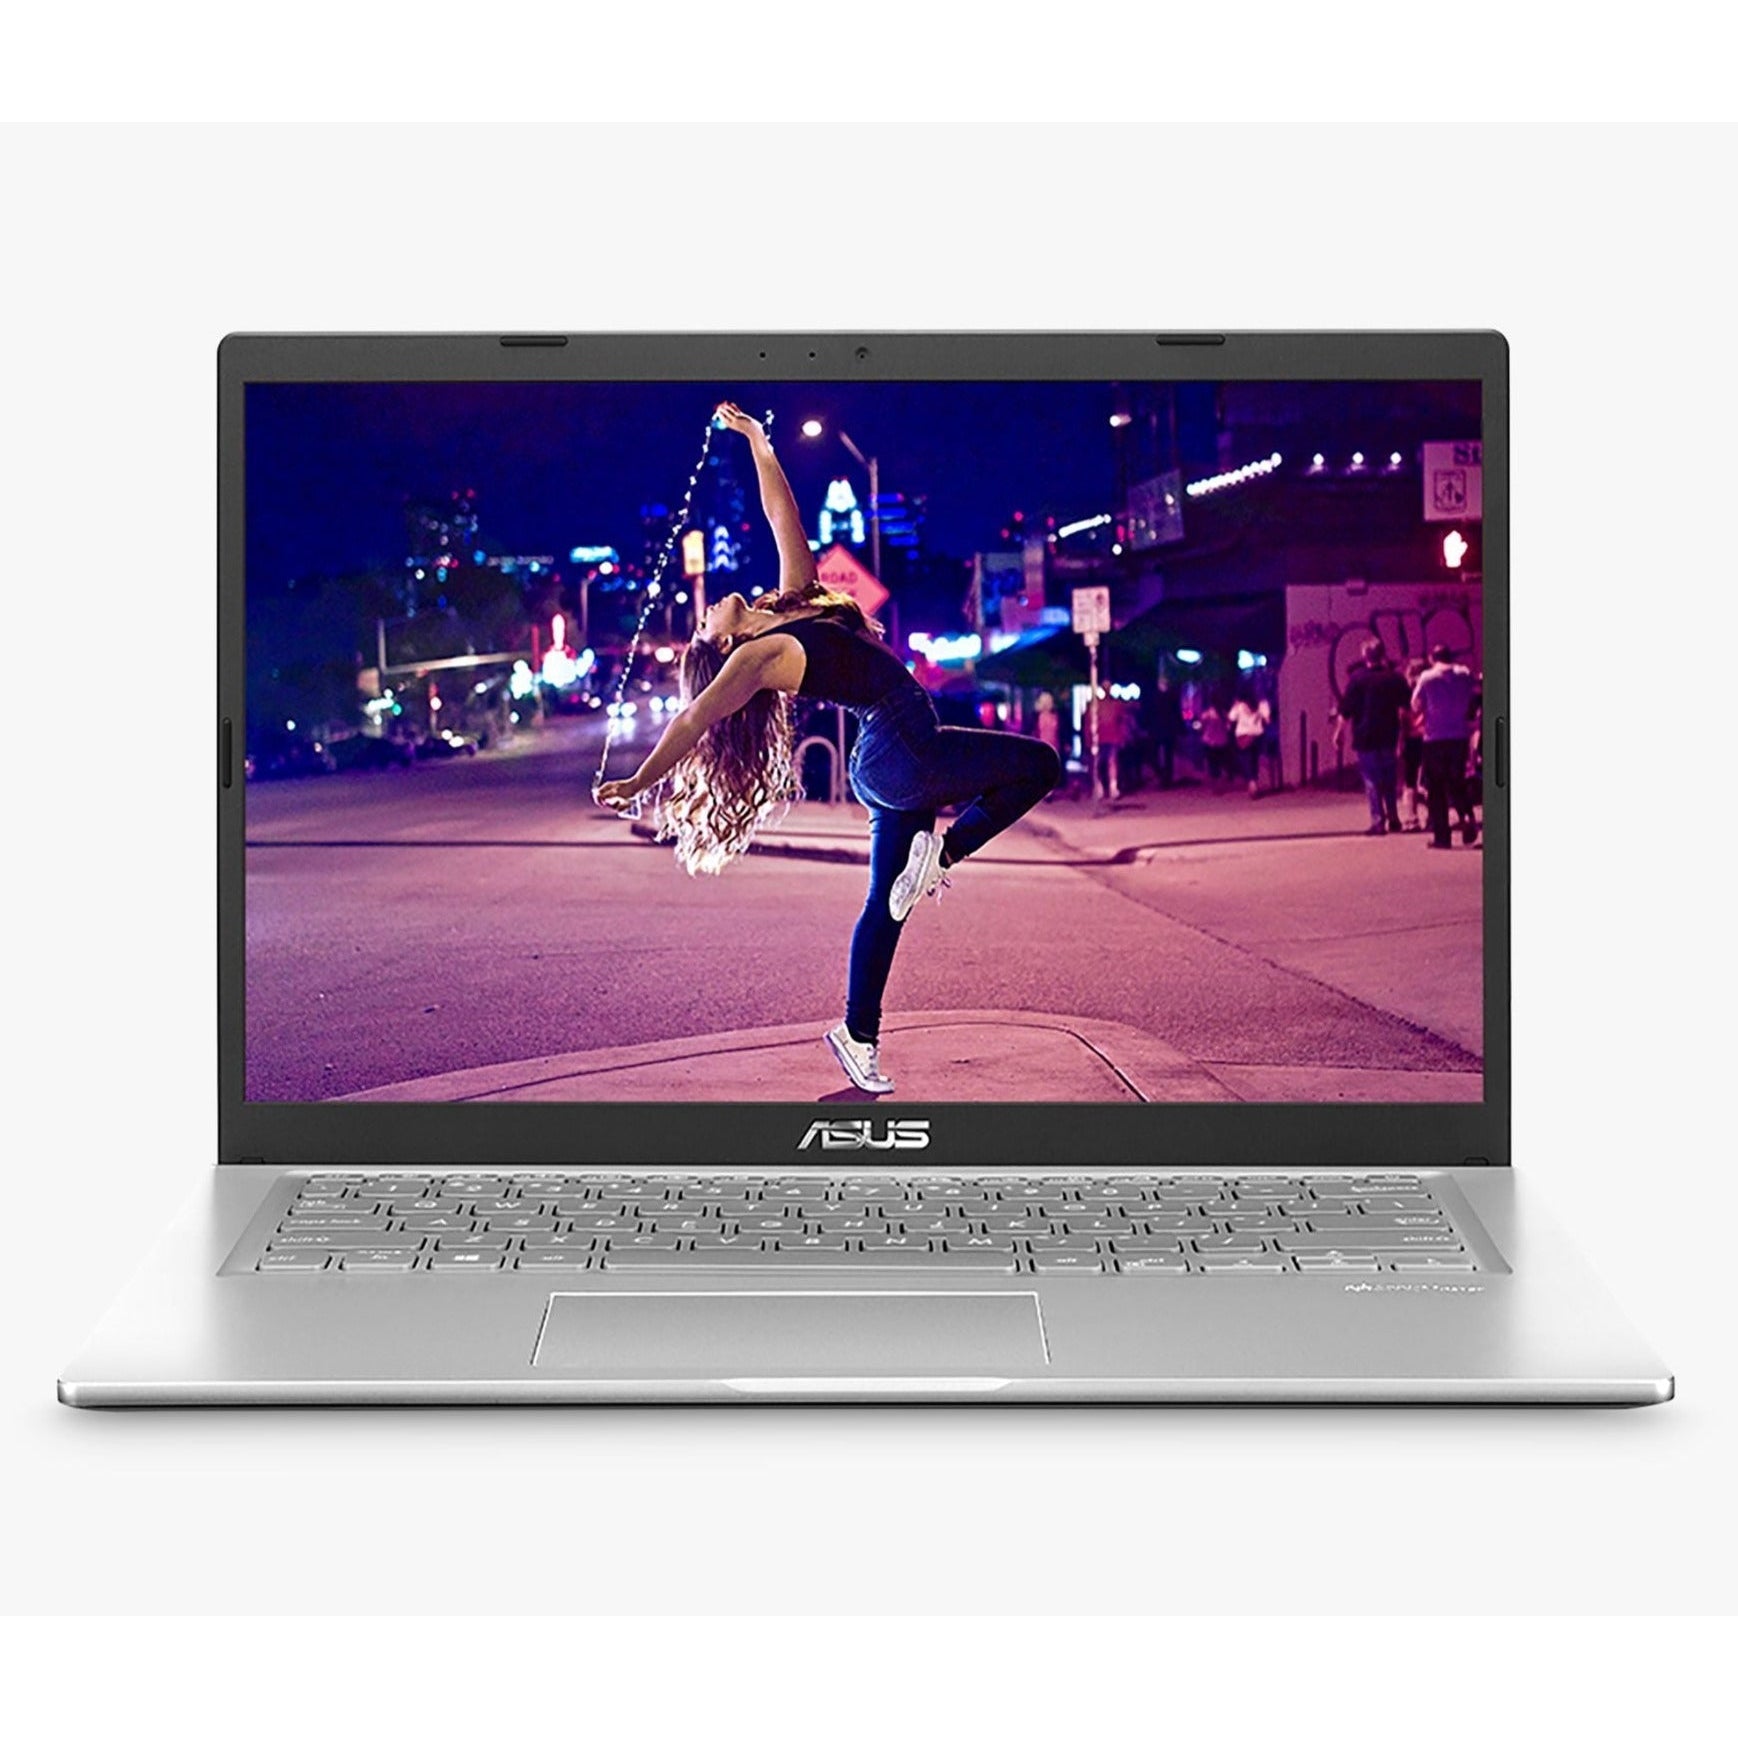 ASUS X415EA-EB383T Laptop, Intel Core i5, 8GB RAM, 256GB SSD, 14", Silver - Refurbished Pristine